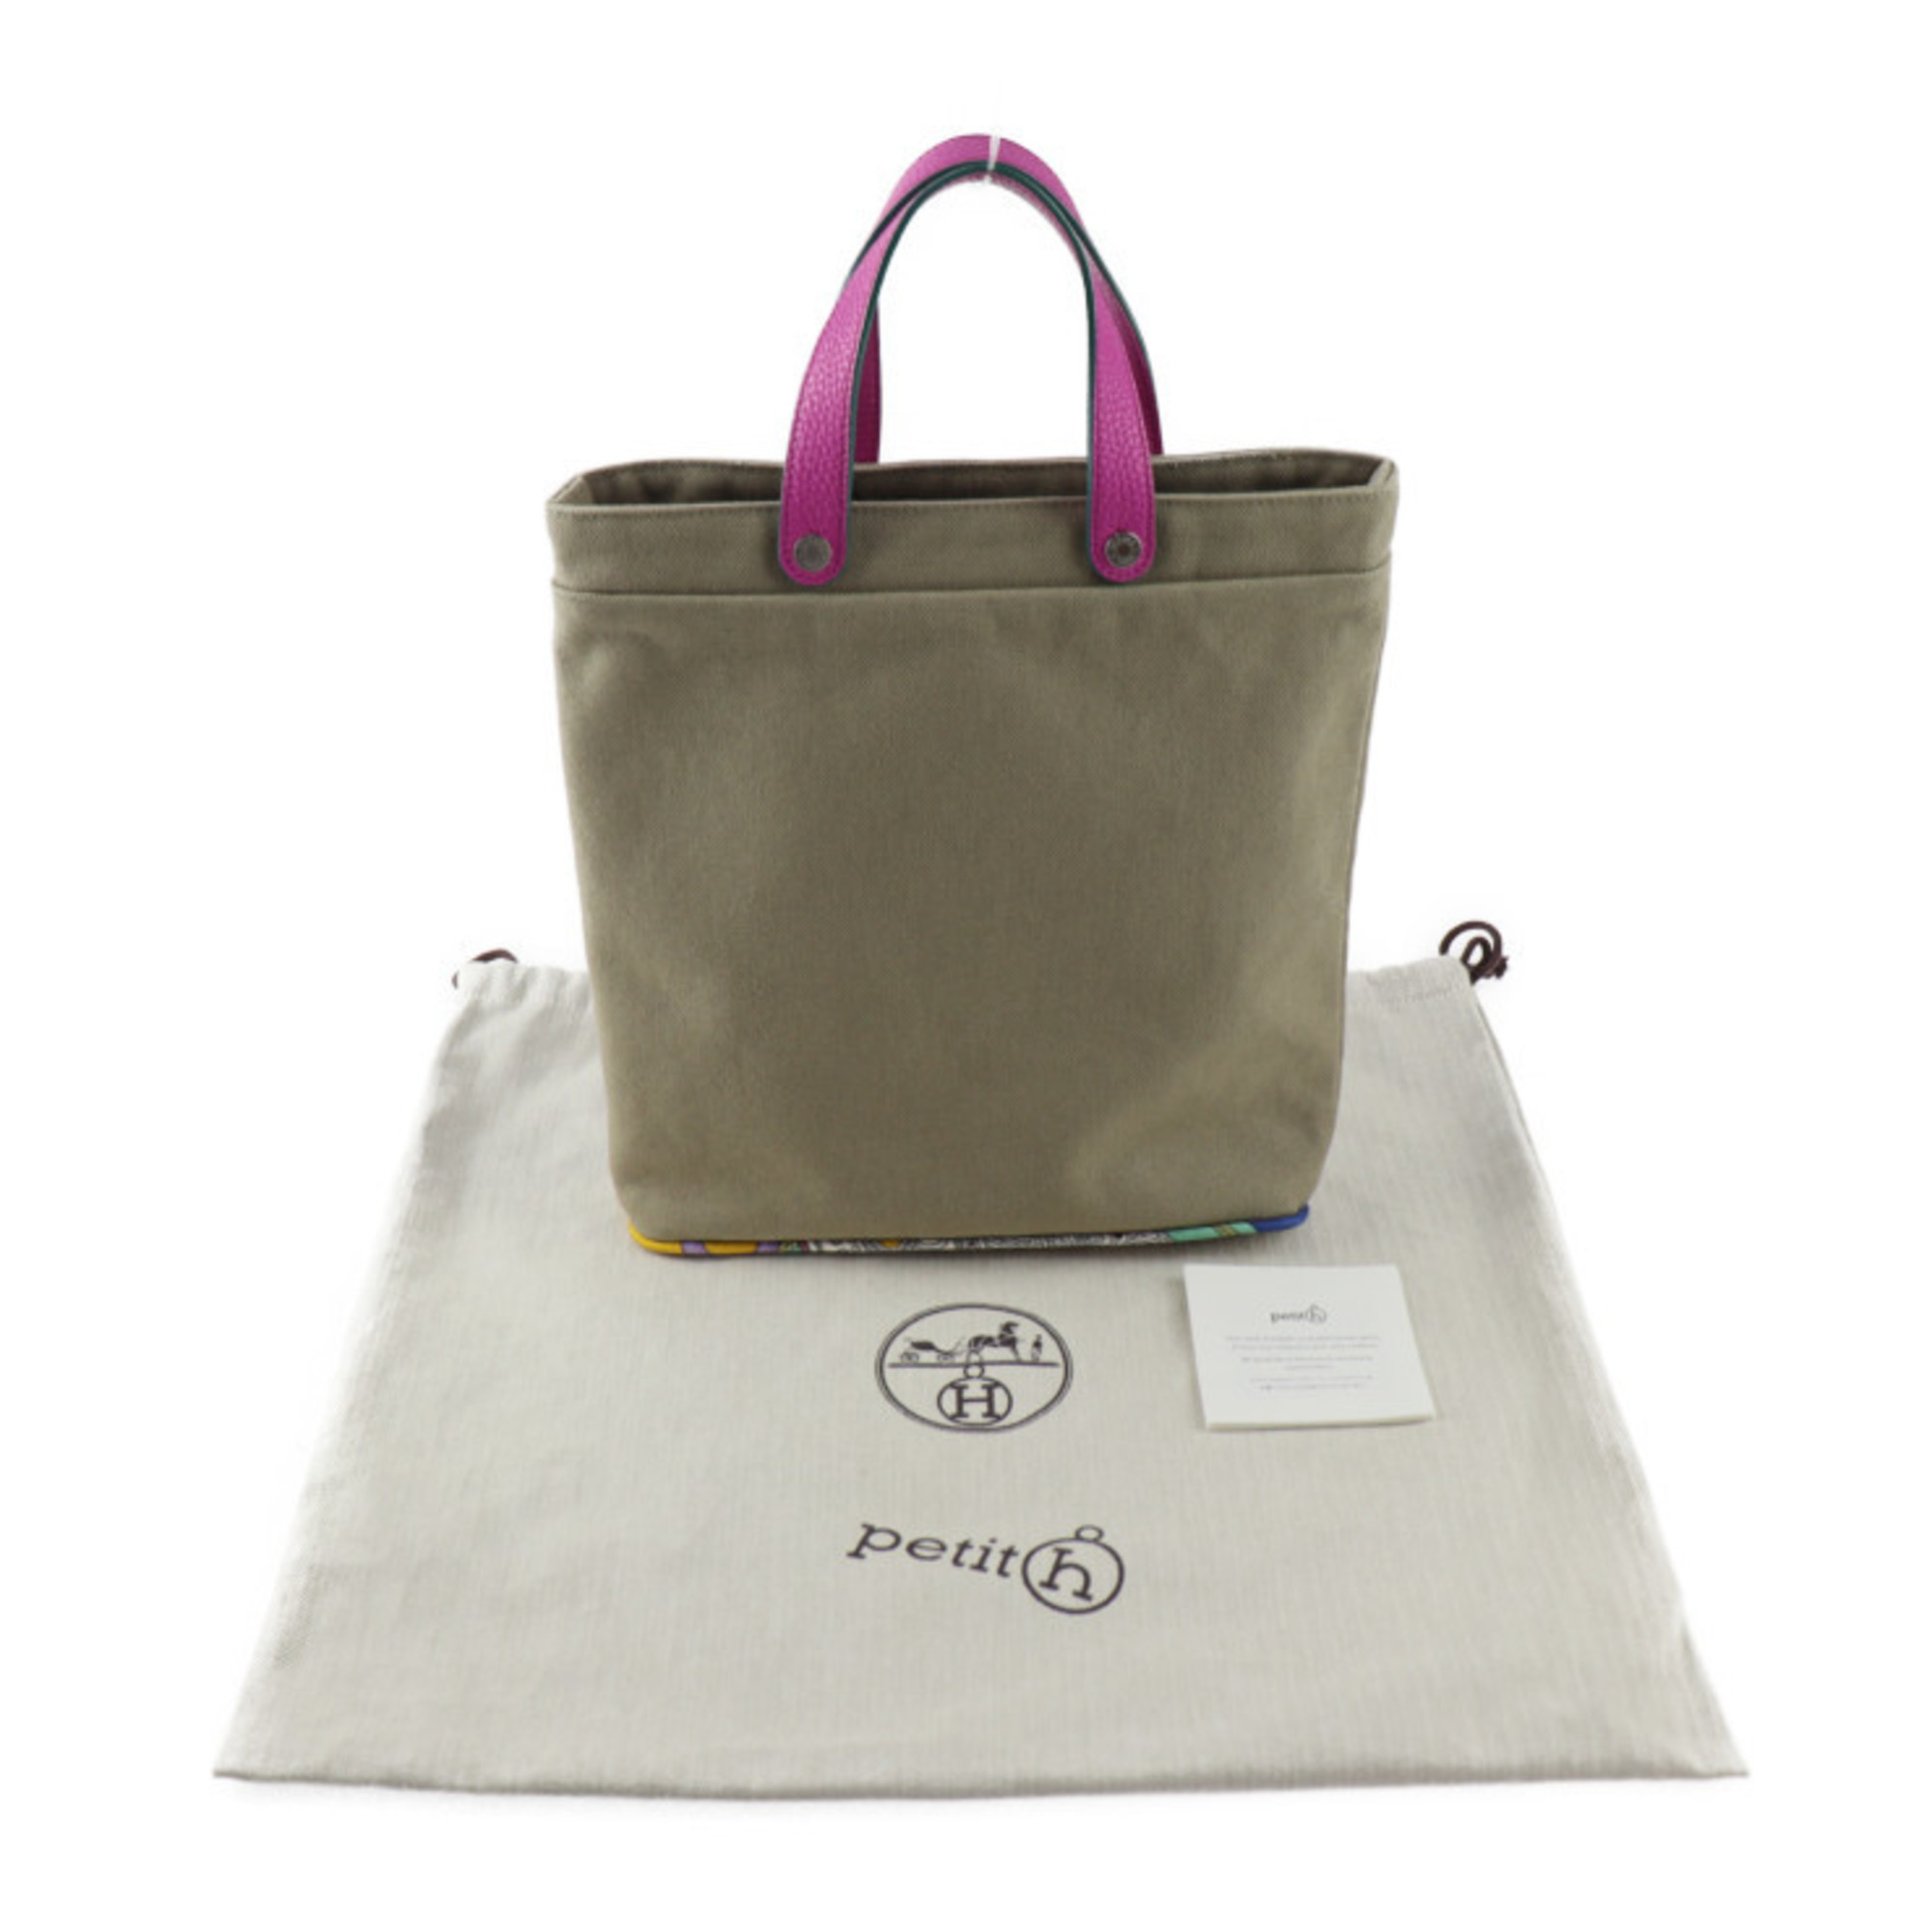 HERMES petit h ash tote bag cotton canvas leather silk khaki pink purple handbag